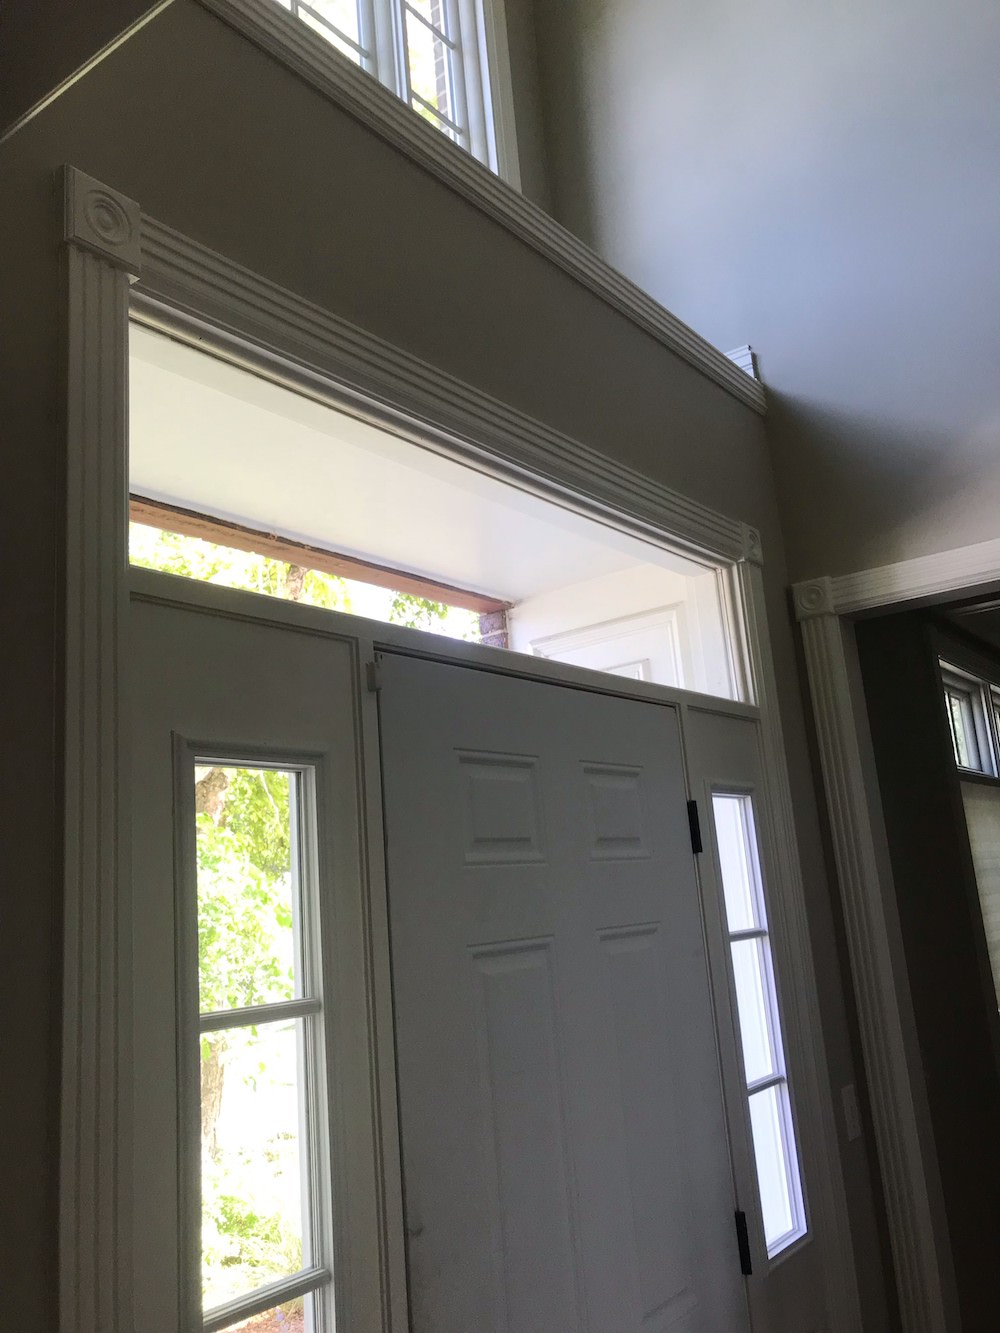 https://genevaglassworks.com/wp-content/uploads/2022/05/insulated-glass-window-above-entry-door-of-home.jpg